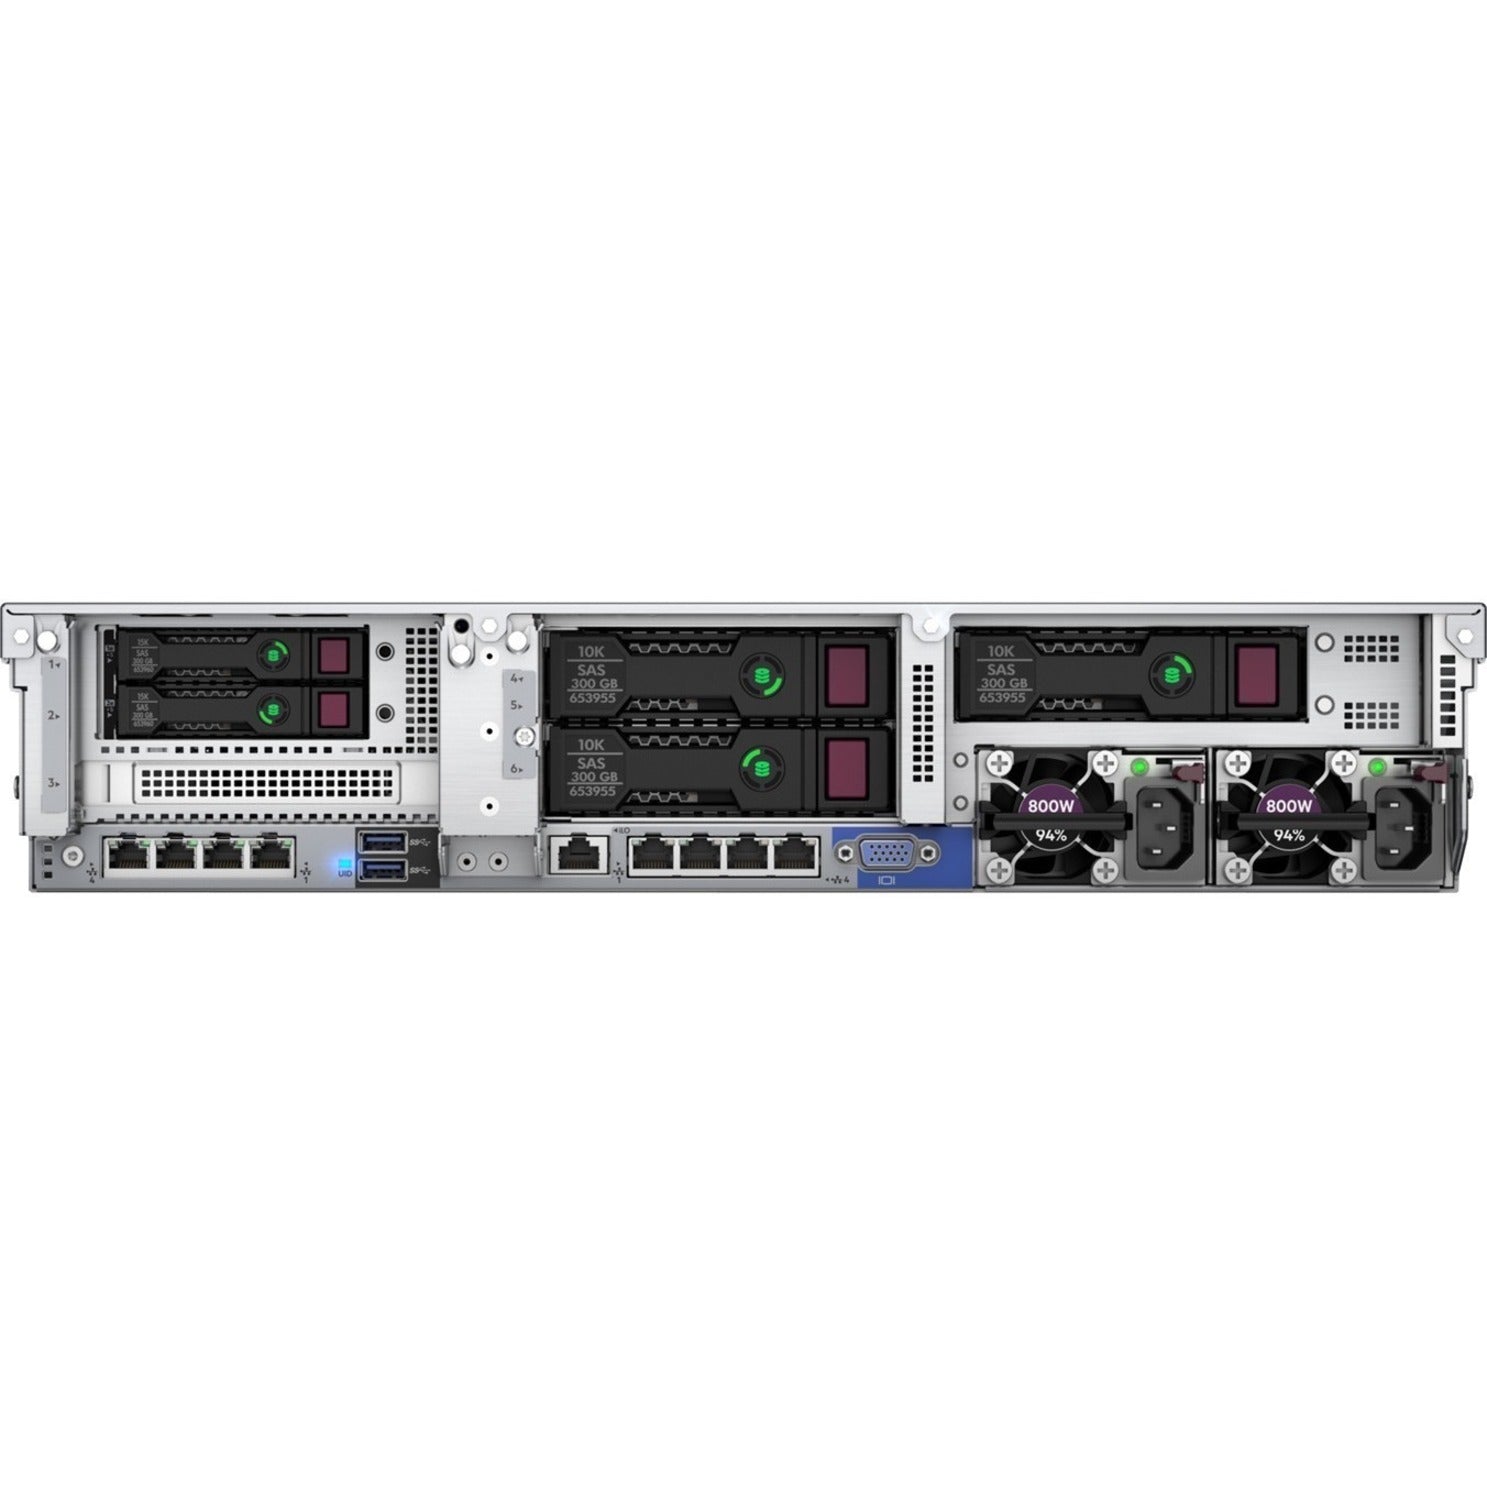 HPE ProLiant DL380 G10 Server - Hexadeca-core, 32GB RAM, 2.90GHz, 8SFF